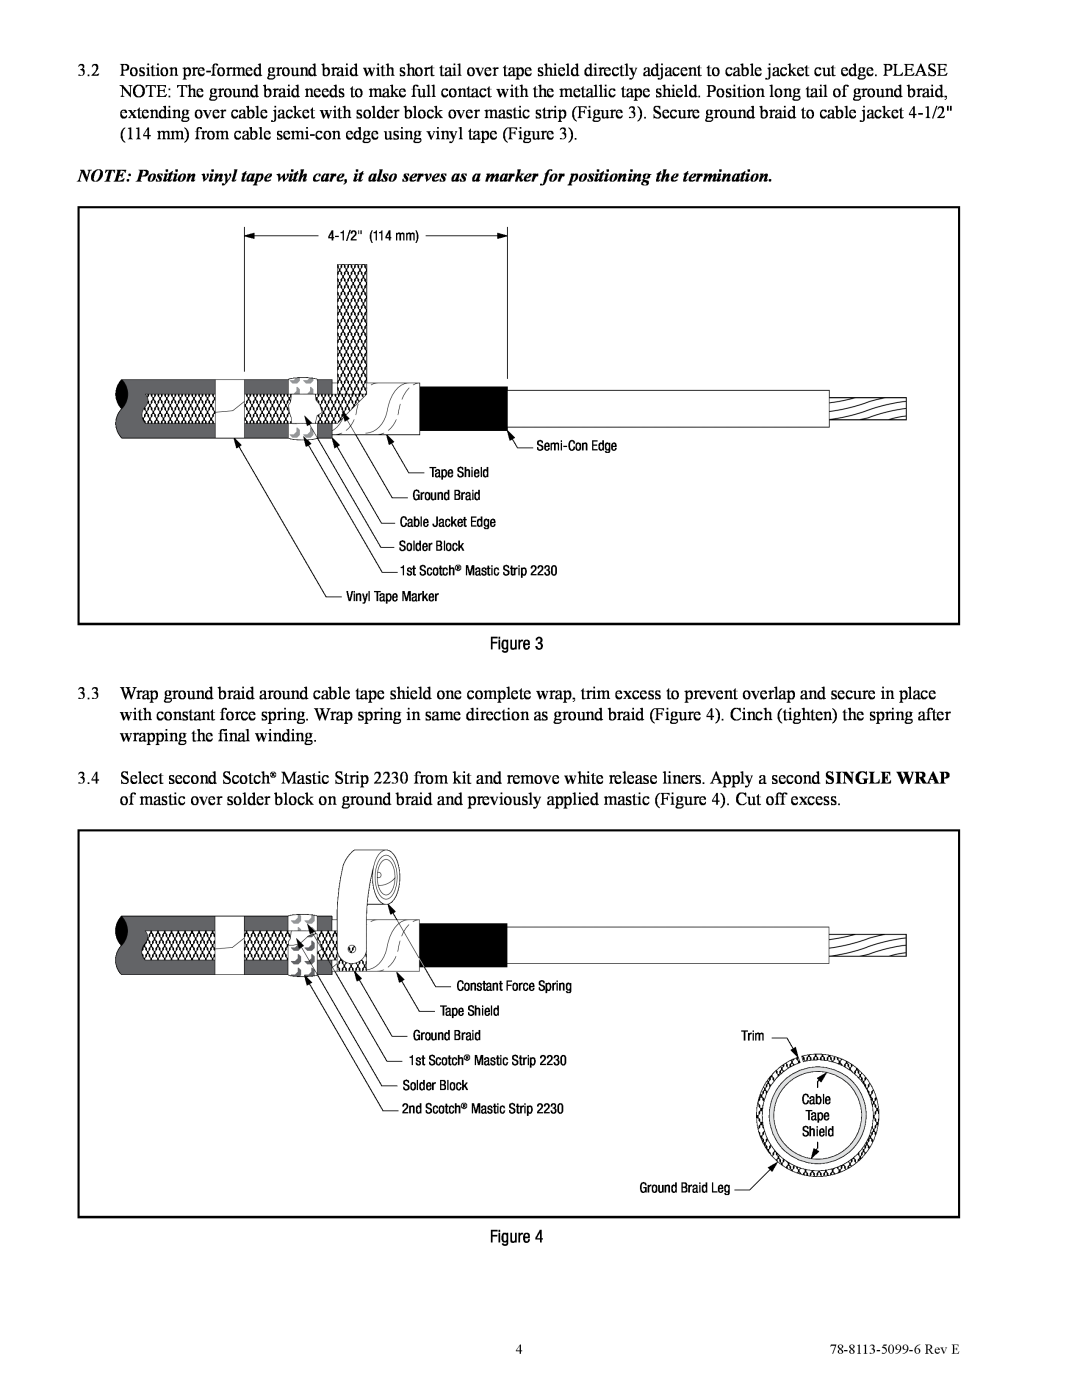 3M 7625-T-110 manual 4-1/2114 mm Semi-ConEdge Tape Shield Ground Braid, Cable Jacket Edge Solder Block, Ground Braid Leg 